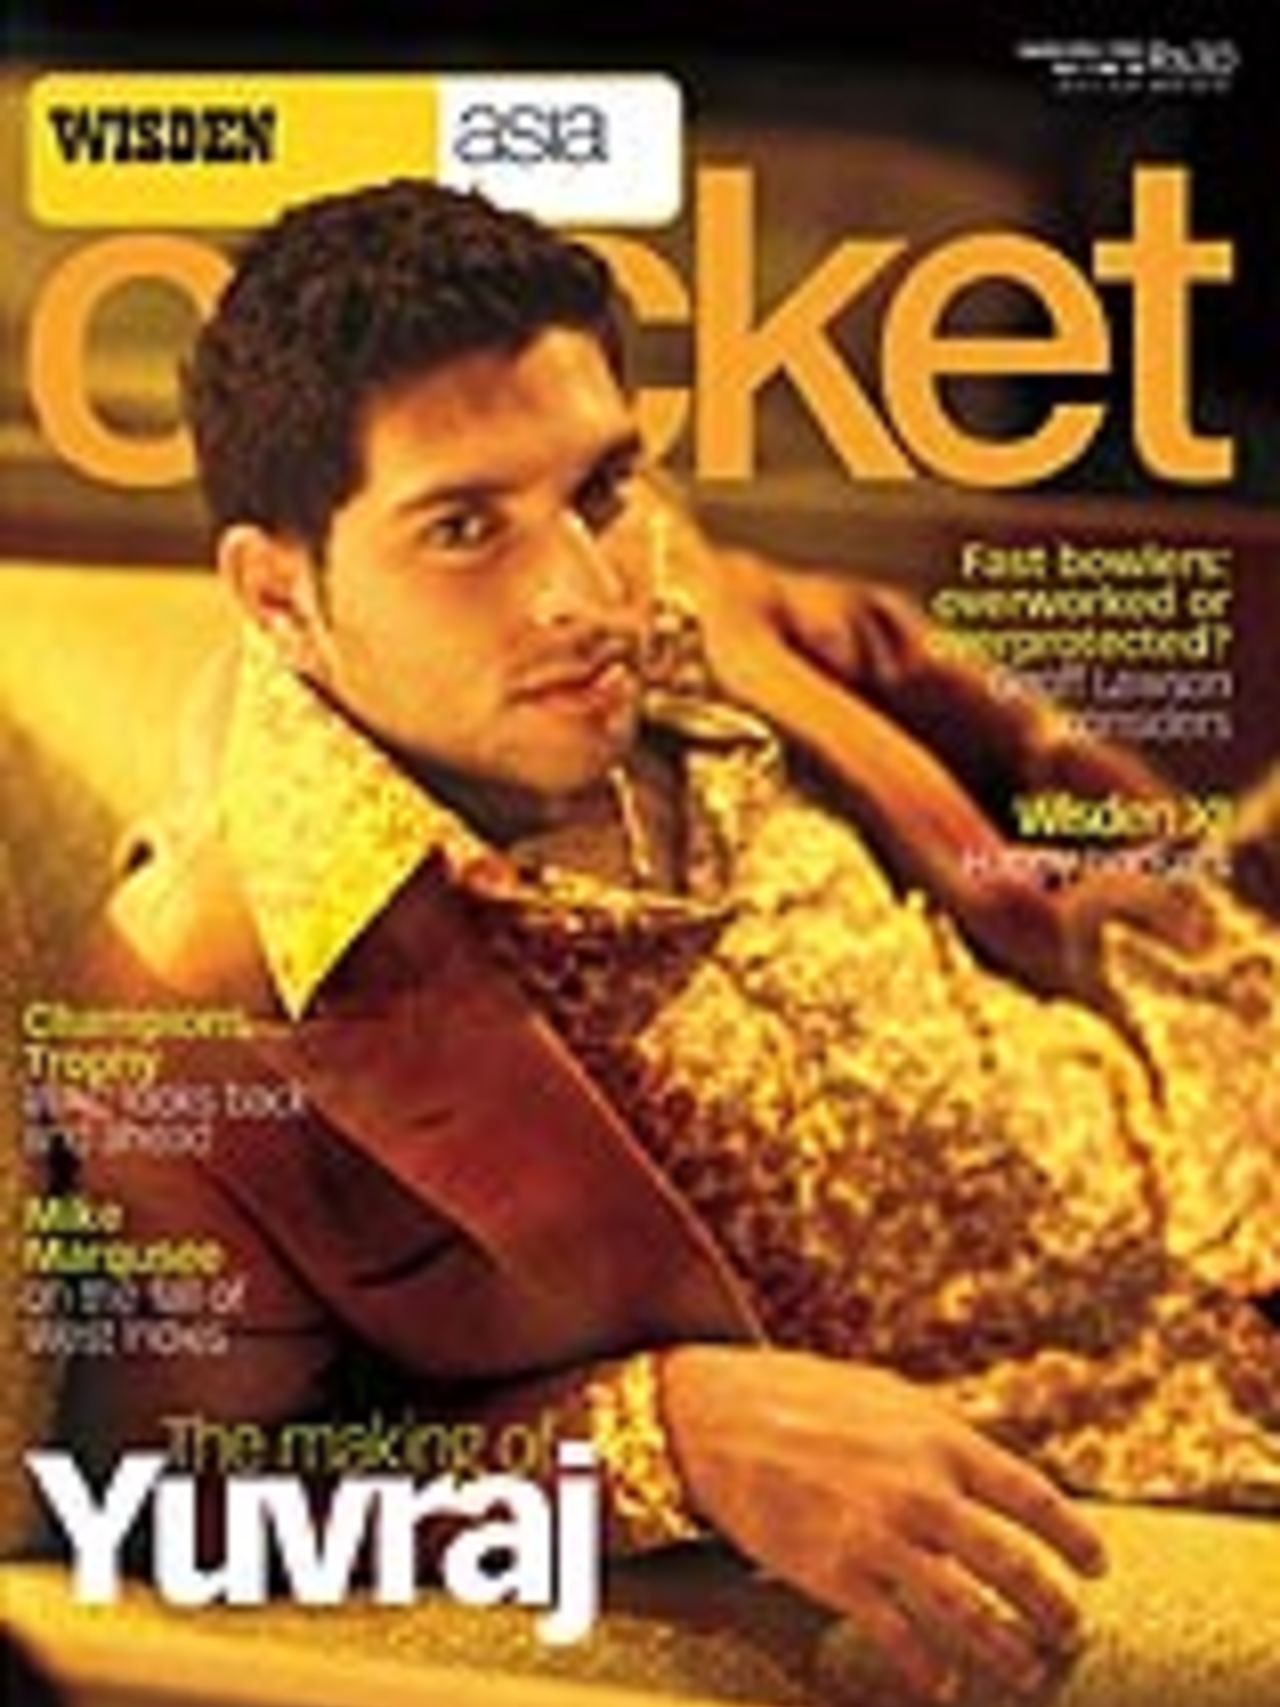 Yuvraj Singh cover on WAC, September 2004